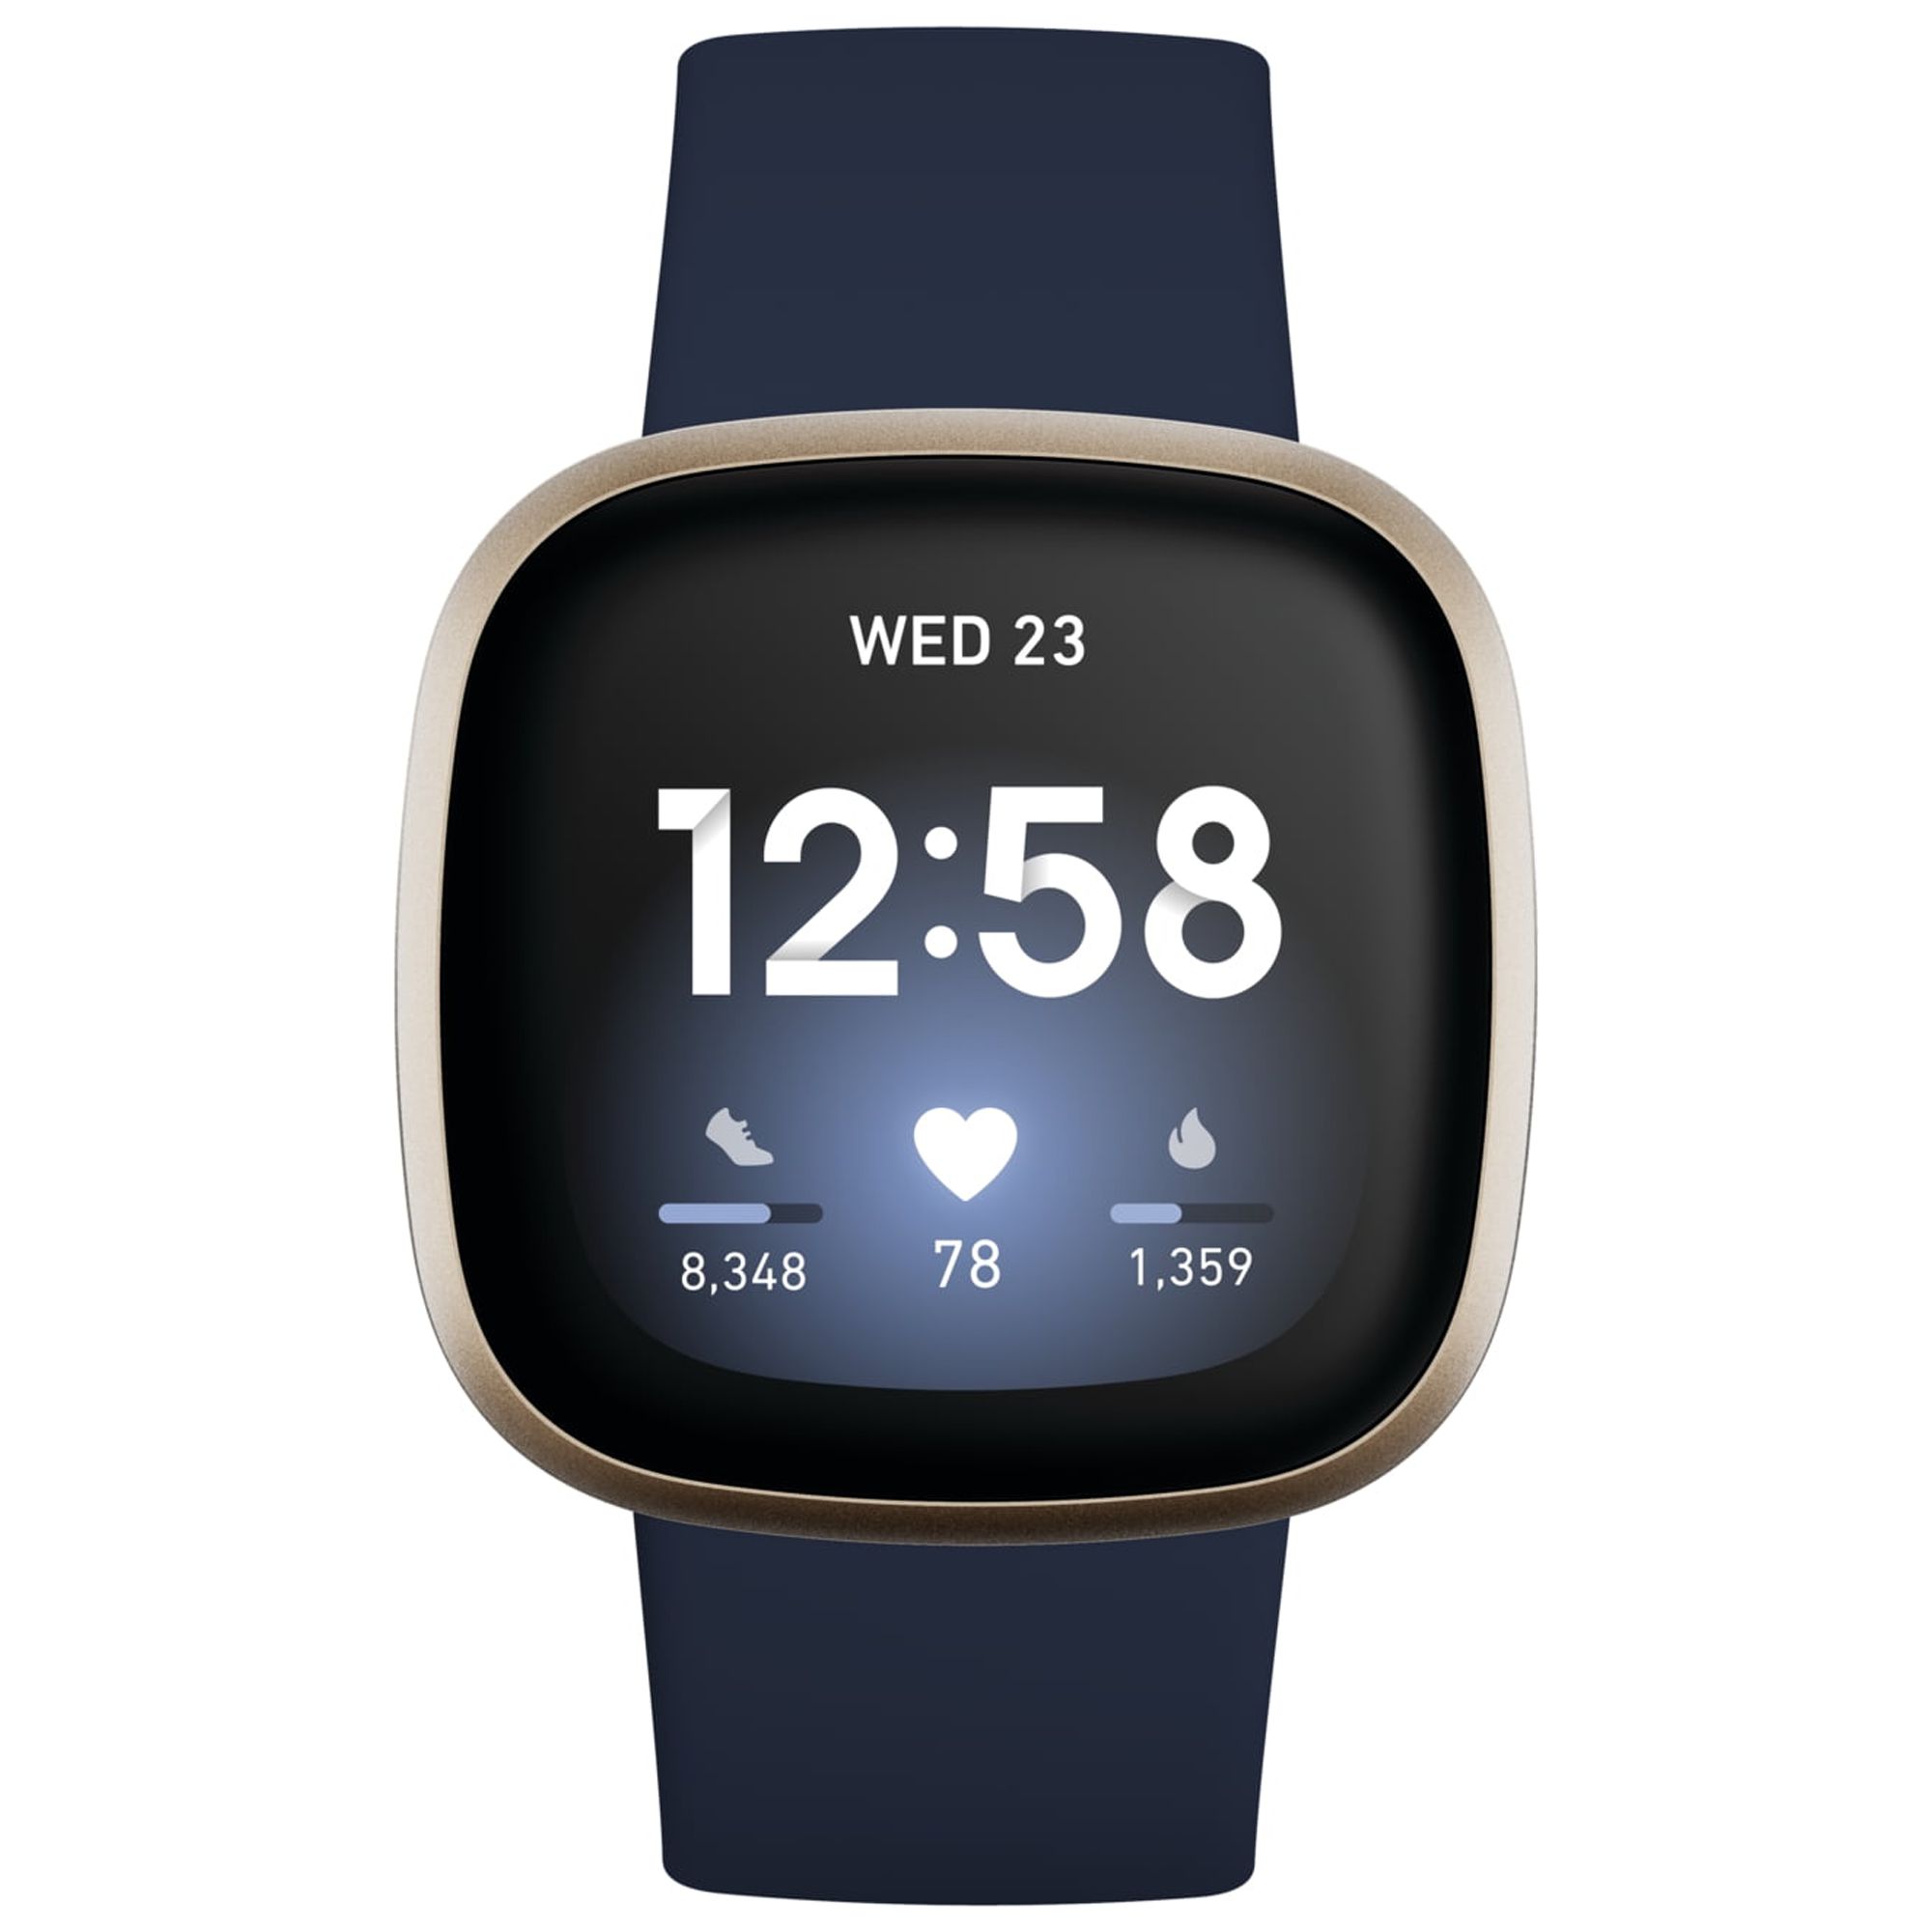 Fitbit Versa 3 Health & Fitness Smartwatch - Midnight/Soft Gold Aluminum - image 4 of 6